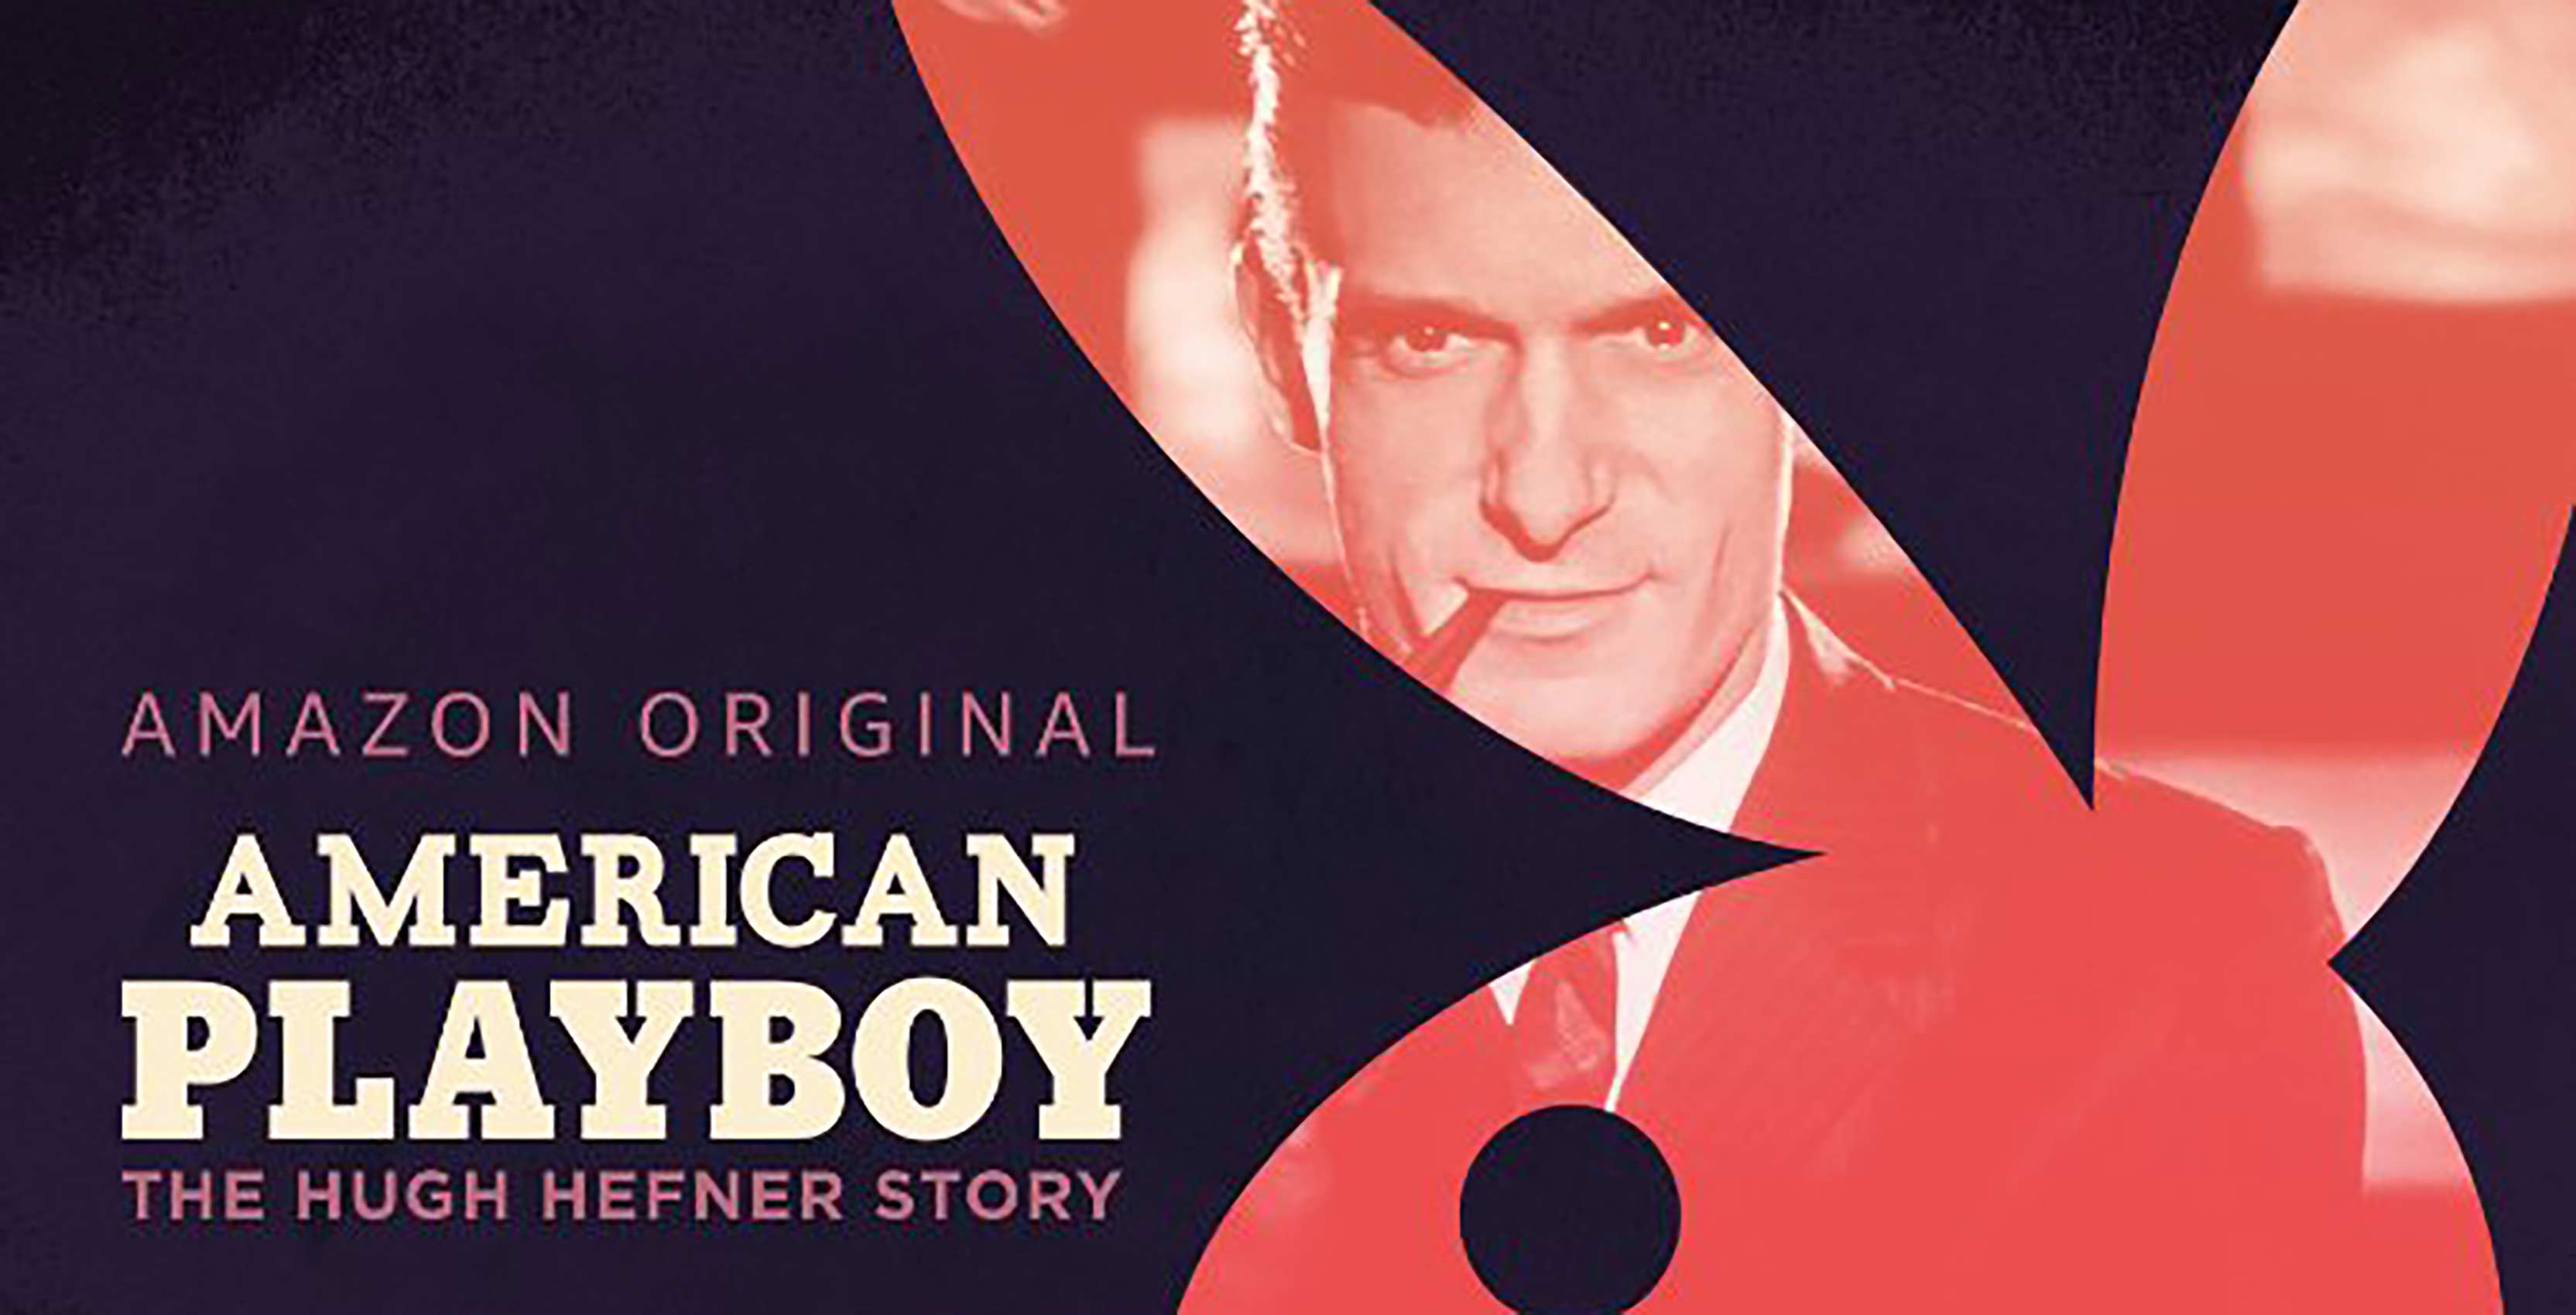 American Playboy: The Hugh Hefner Story an Amazon Prime Video original